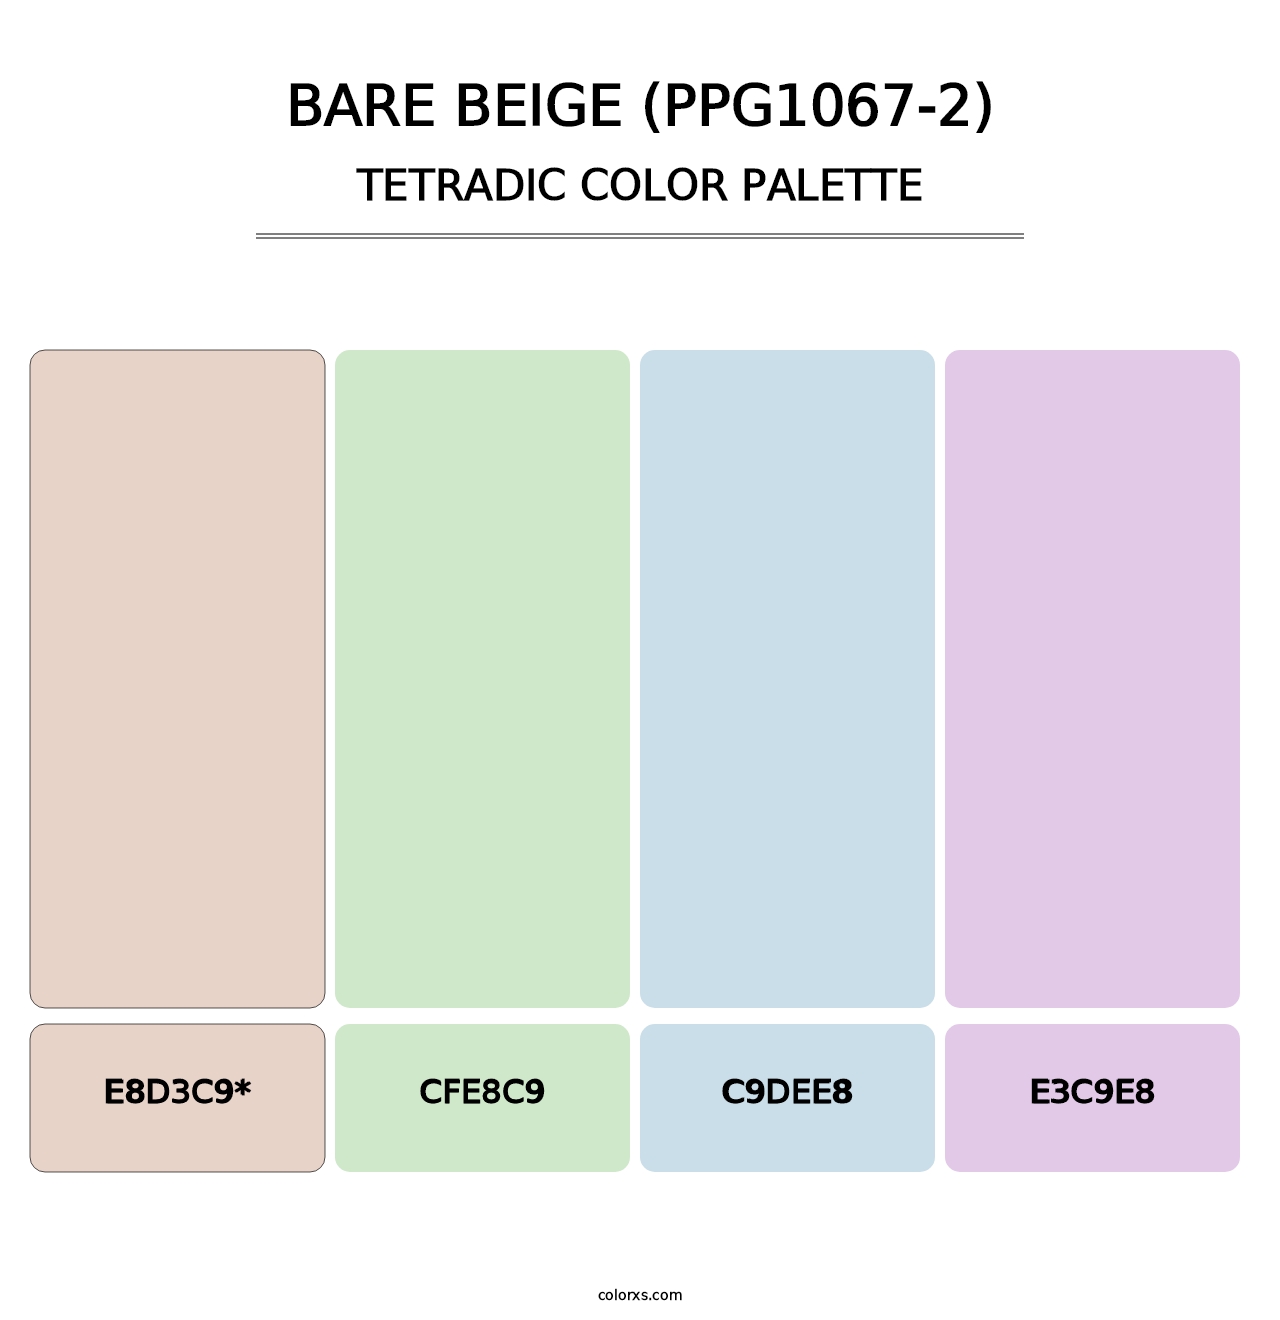 Bare Beige (PPG1067-2) - Tetradic Color Palette